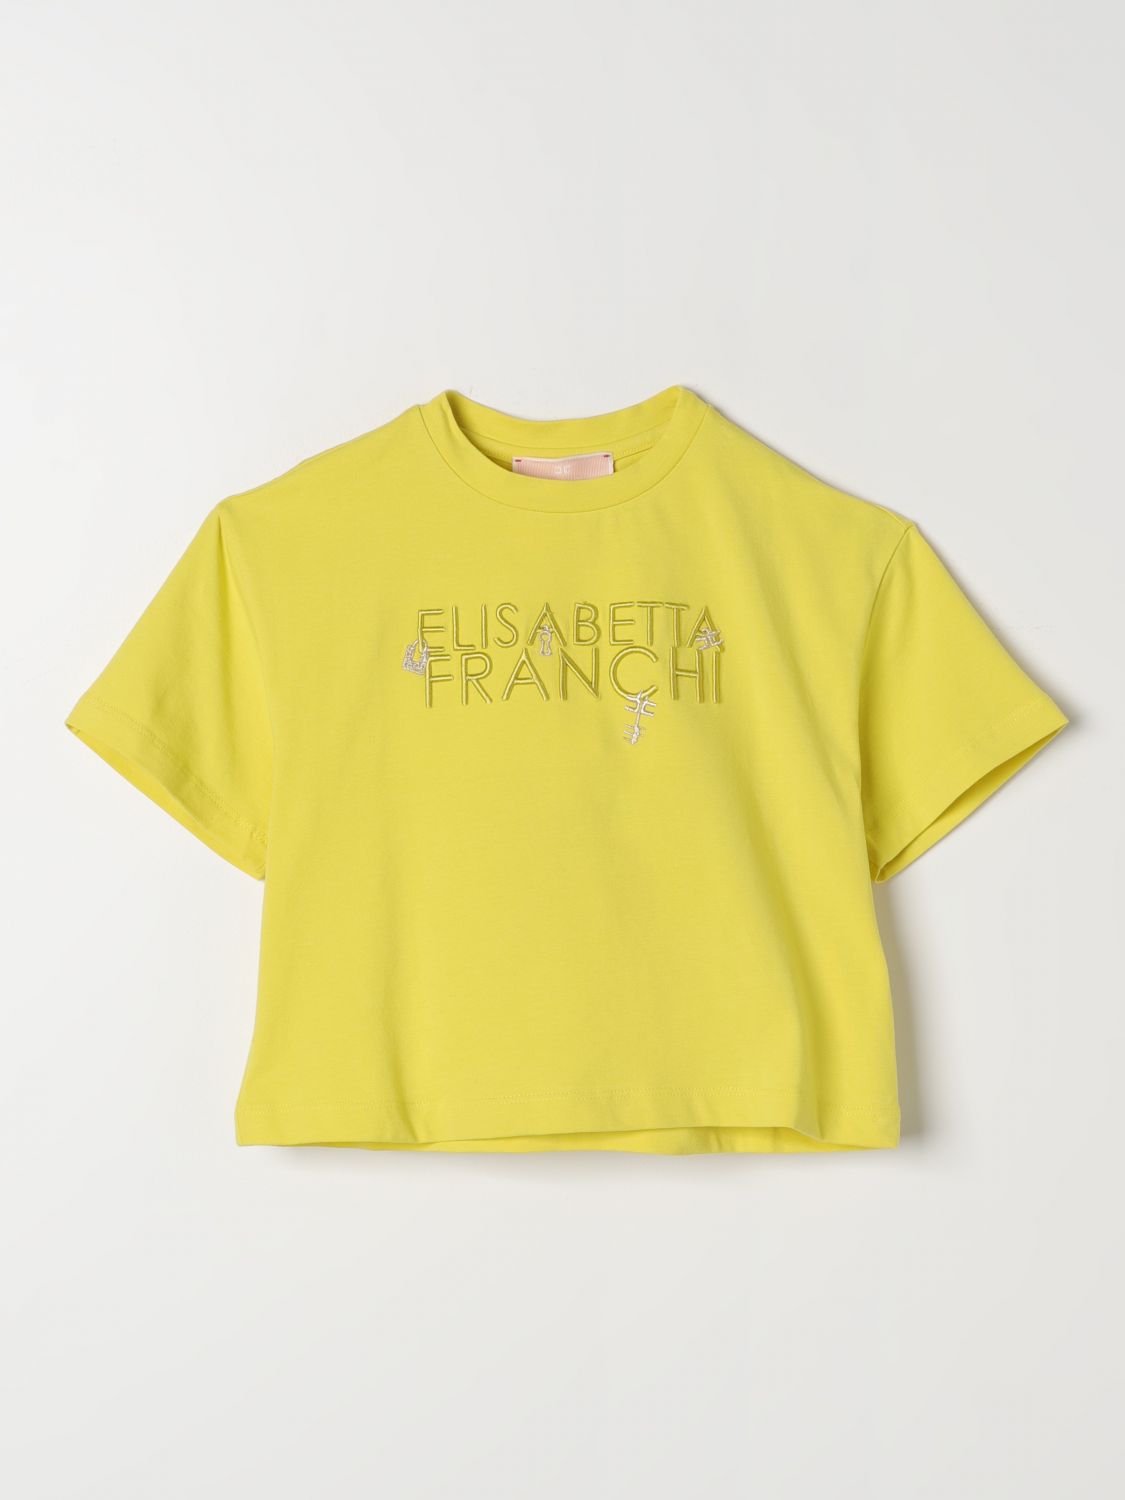 Elisabetta Franchi La Mia Bambina T-shirt  Kids Color Cedar